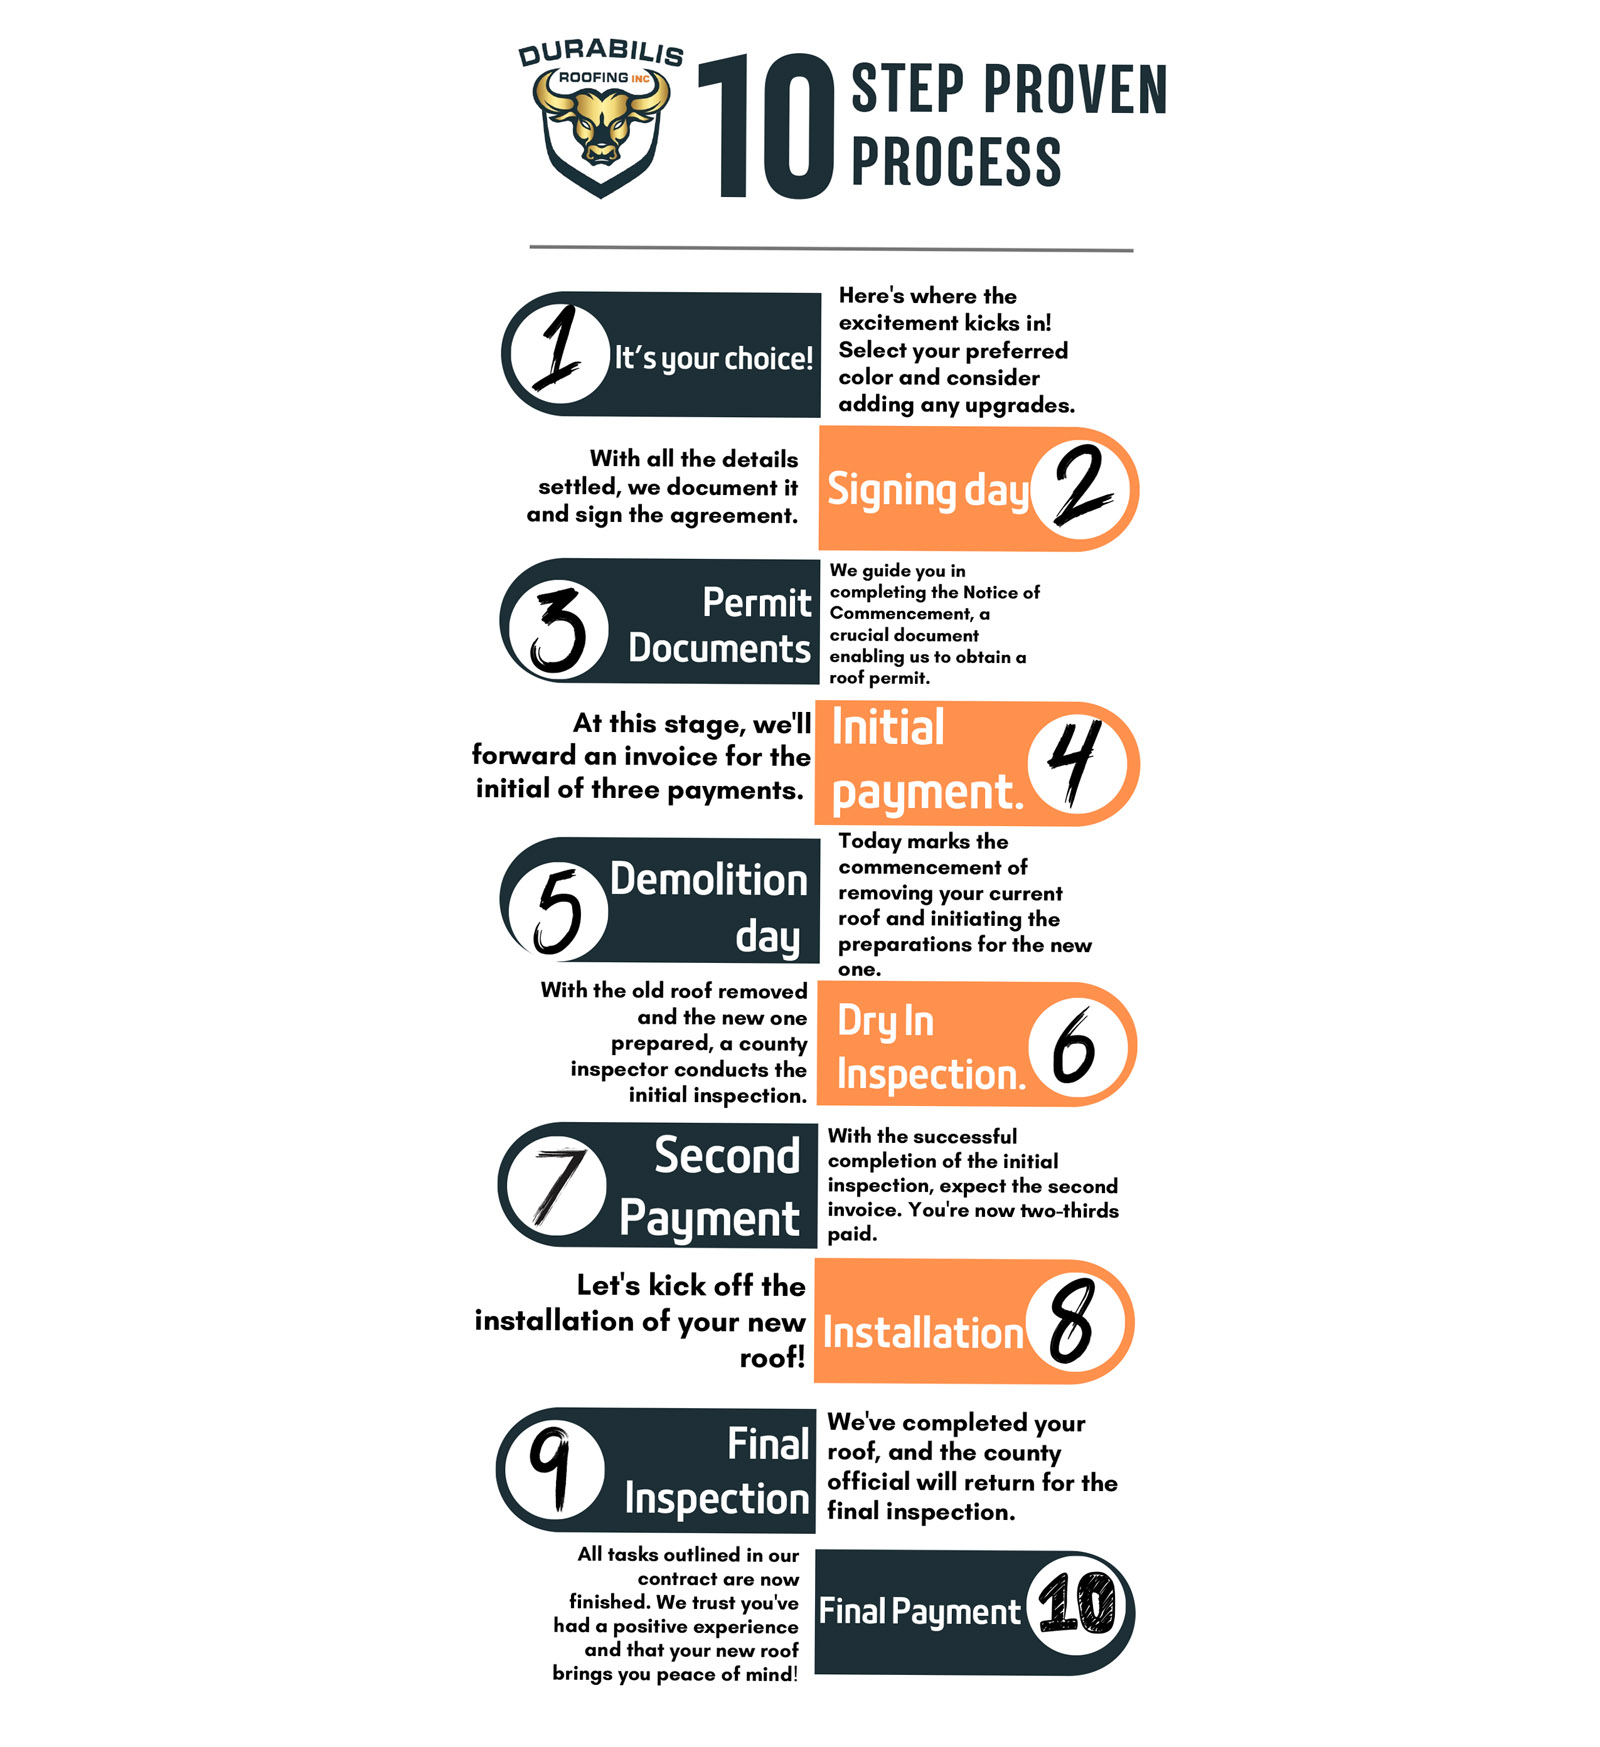 Durabilis 10 Step process